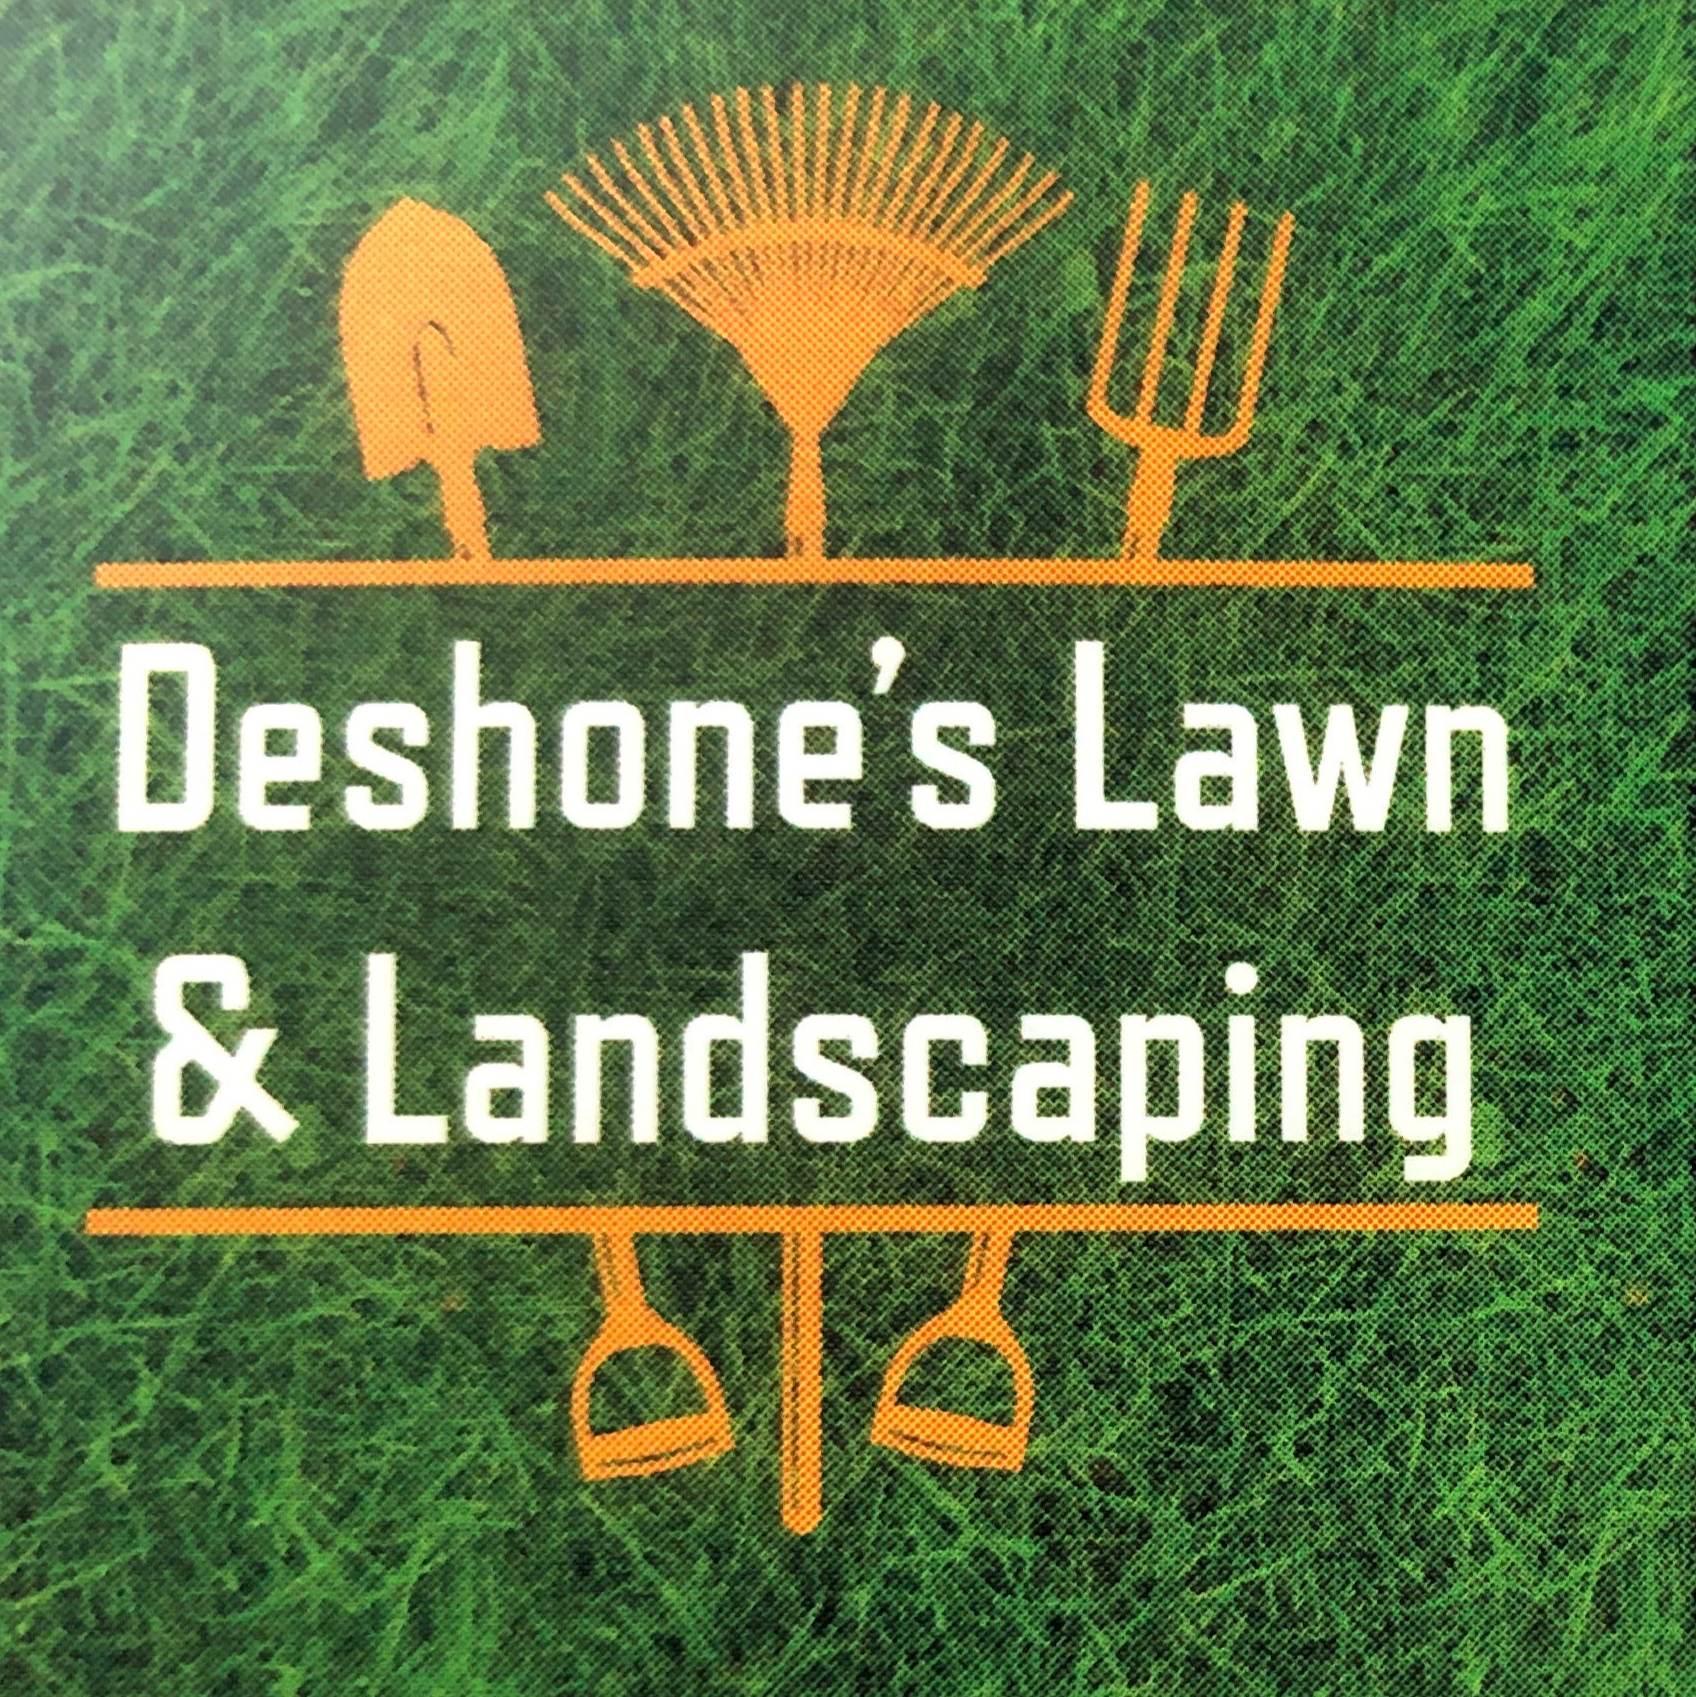 Deshone’s Lawn & Landscaping